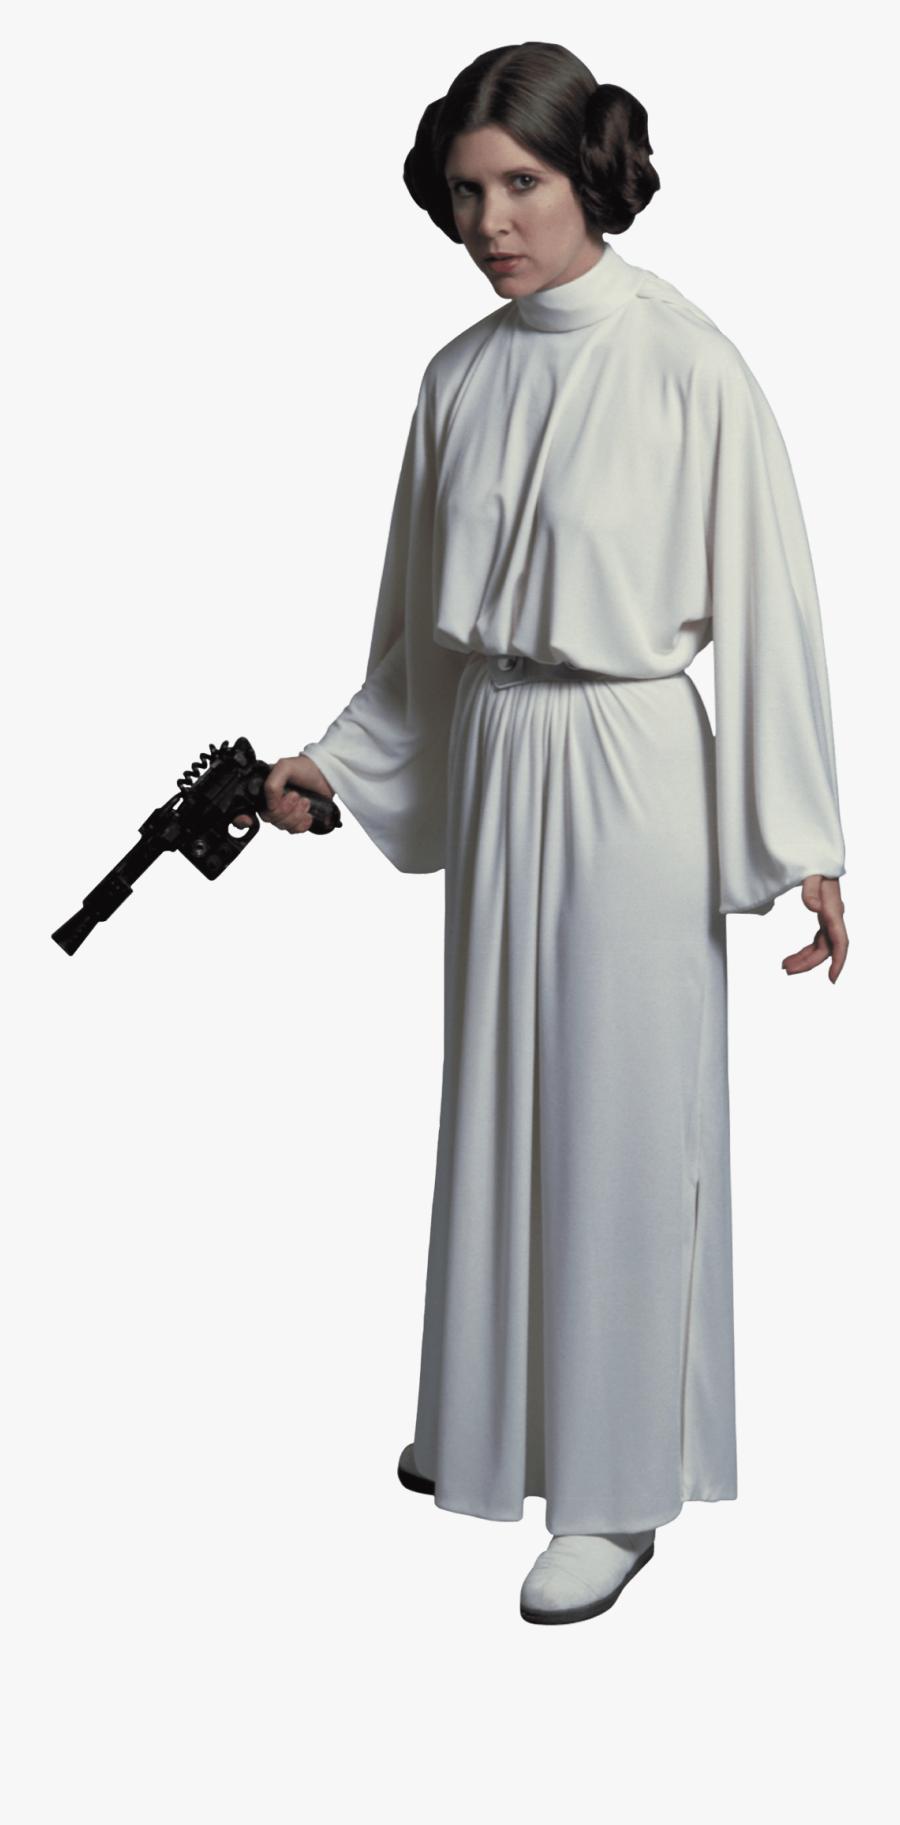 Princess Leia Standing - Star Wars Leia Png, Transparent Clipart